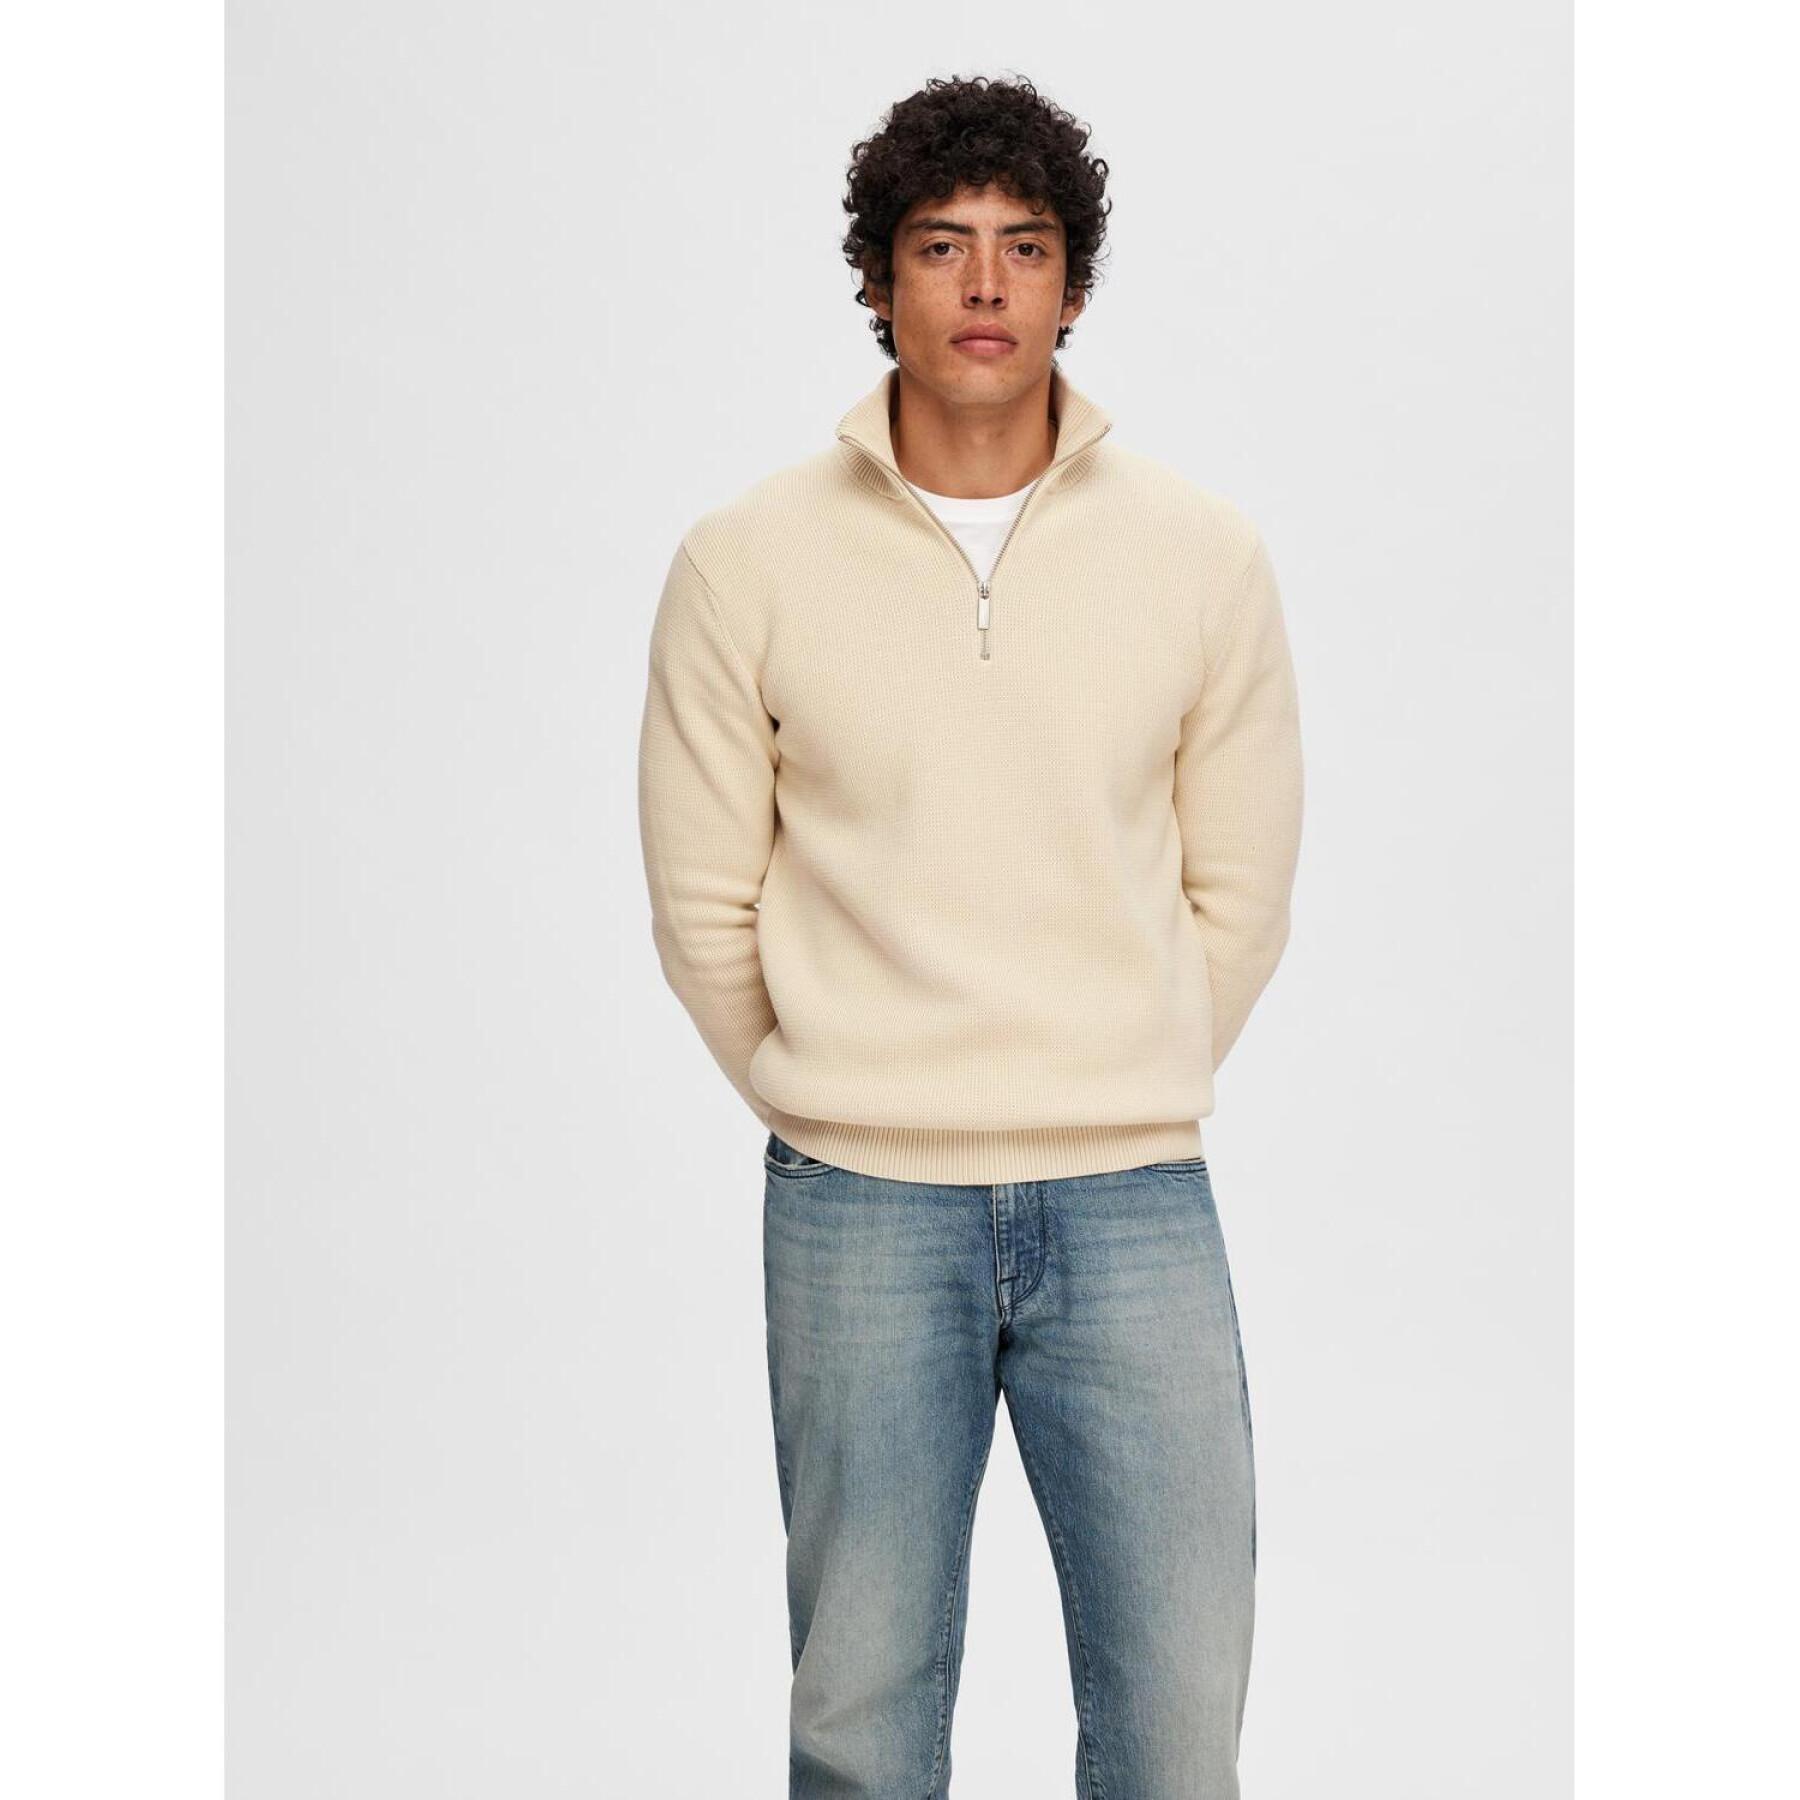 Zipped sweater Selected Dane